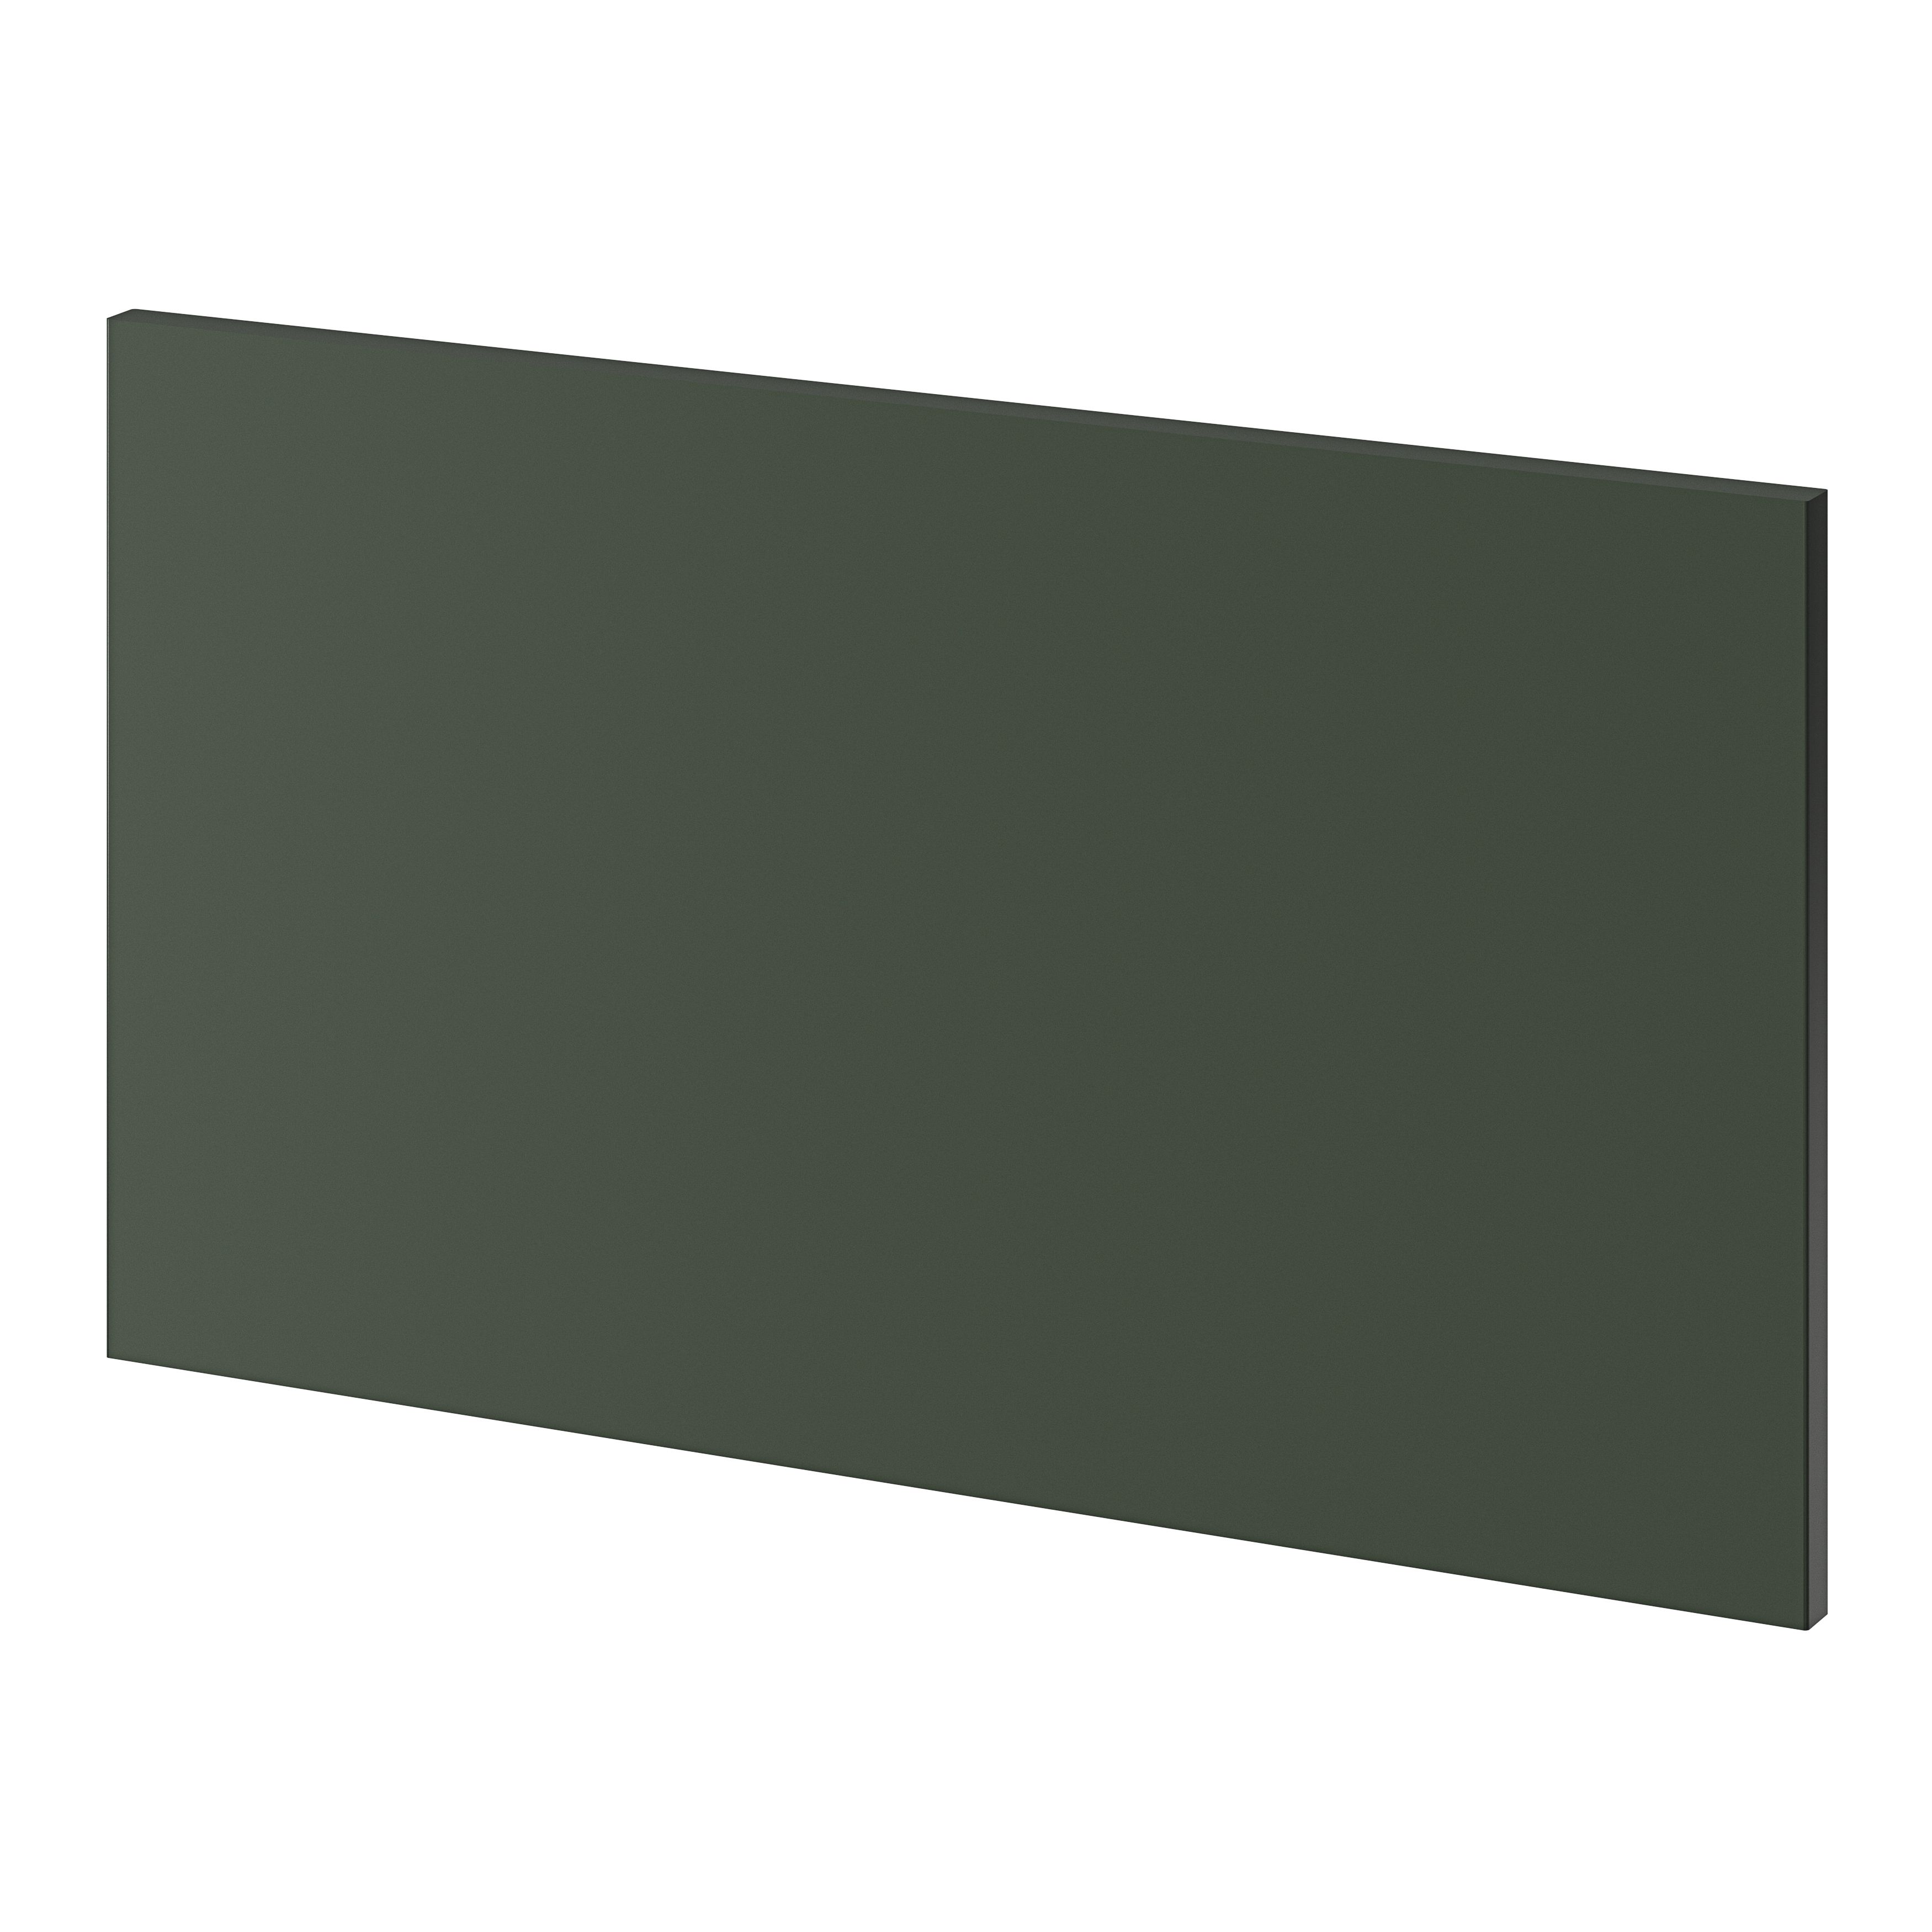 GoodHome Artemisia Matt dark green shaker Standard Base Drawer end panel (H)340mm (W)595mm